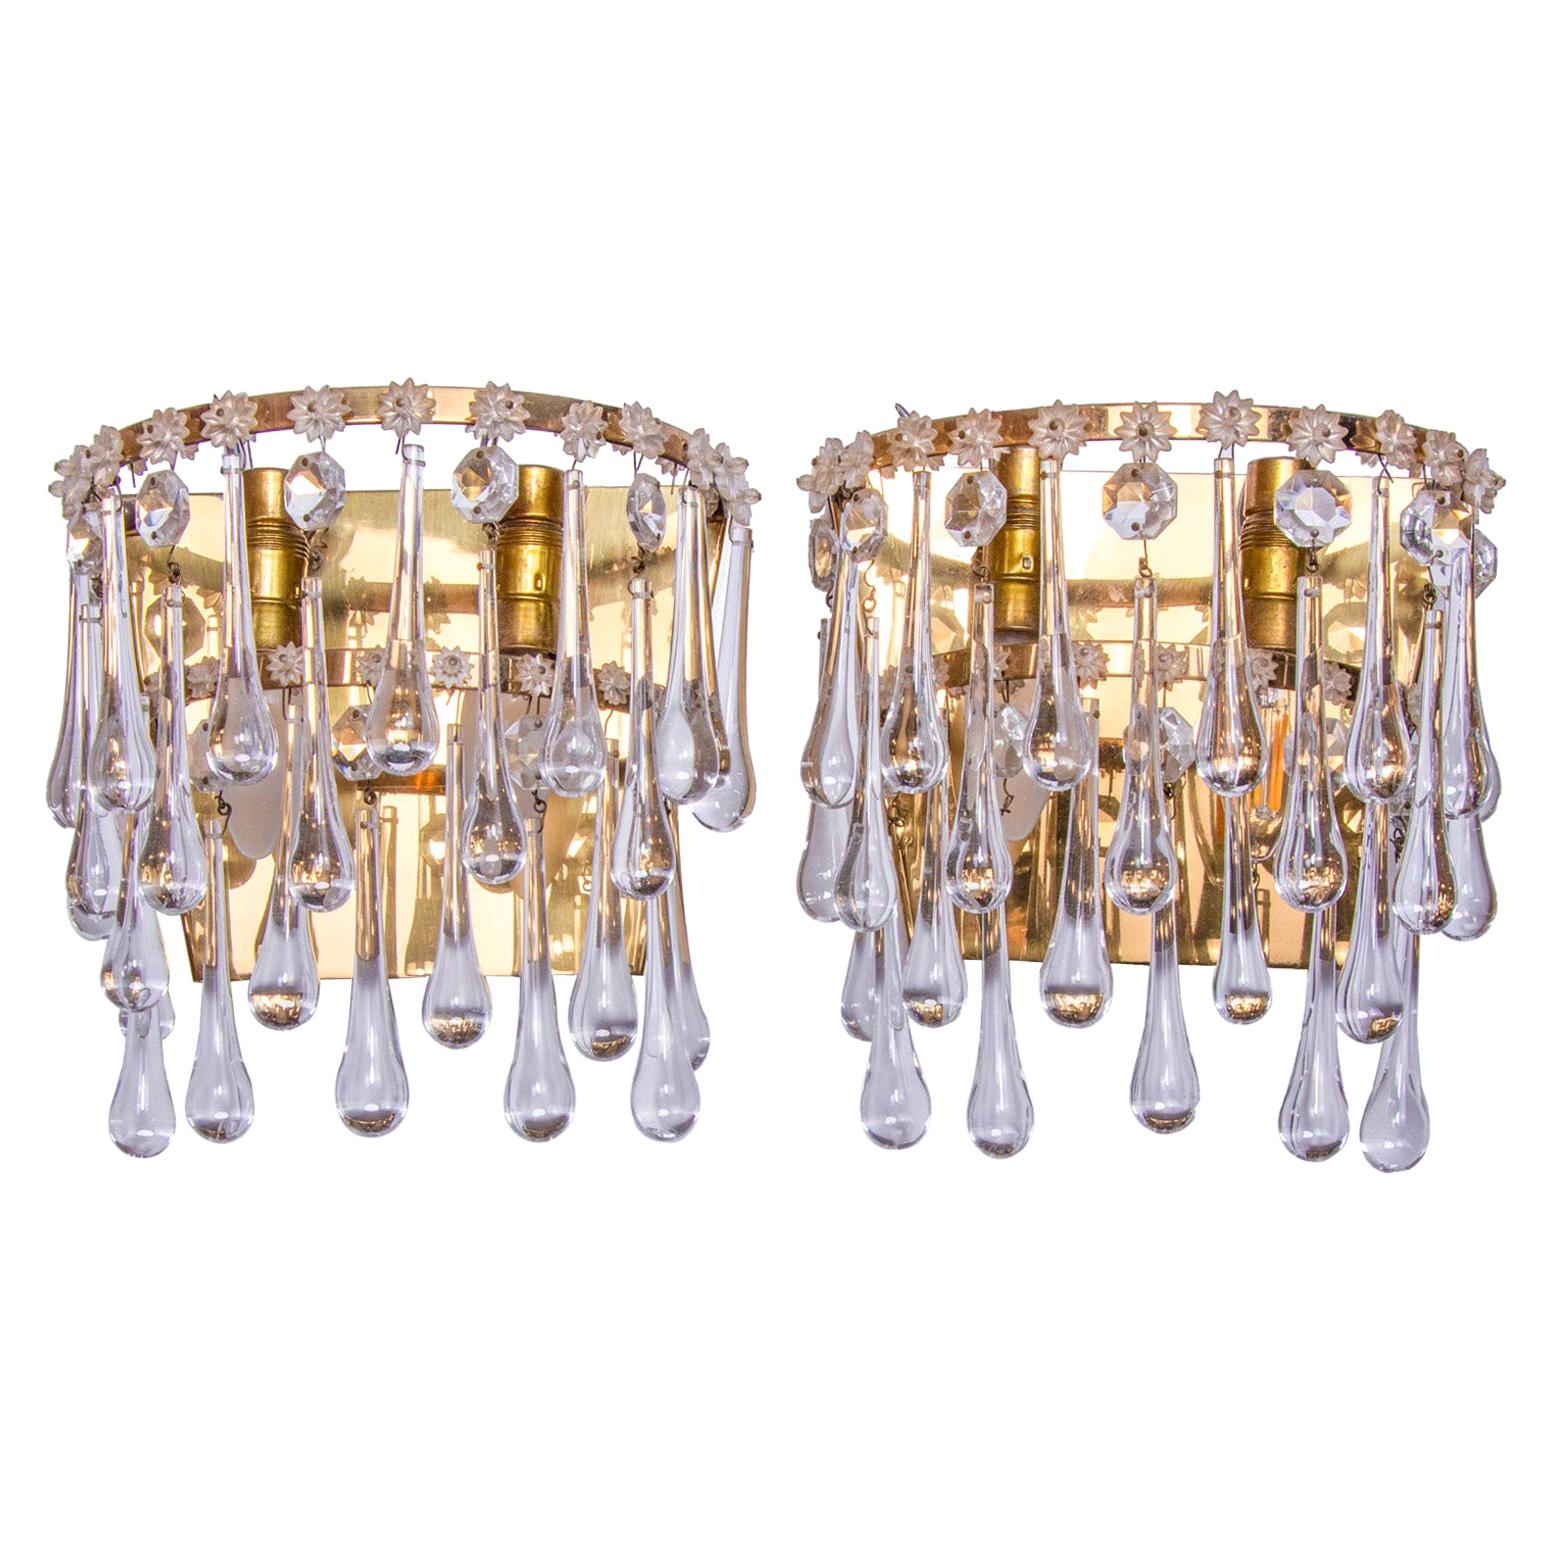 1960 Vintage Teardrop Wall Sconce Crystal Glass & Brass, Set of 2